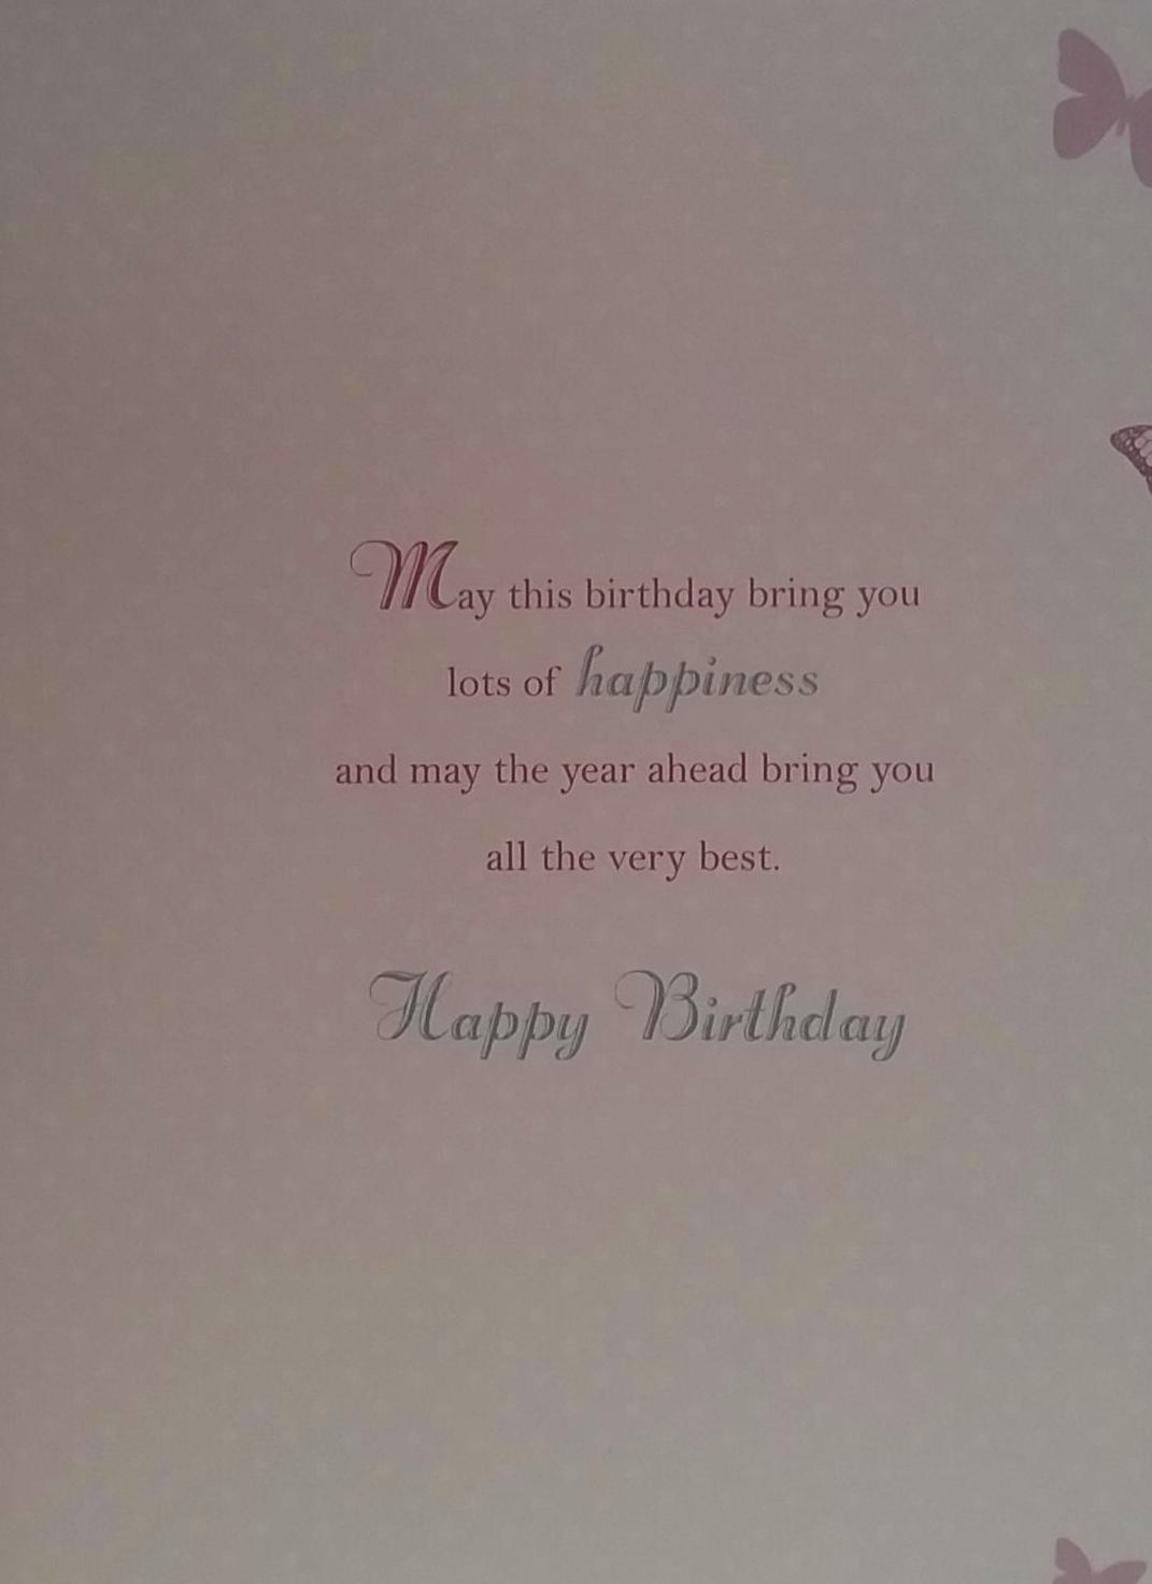 To A Wonderful Daughter Beautiful Purse Design Birthday Card